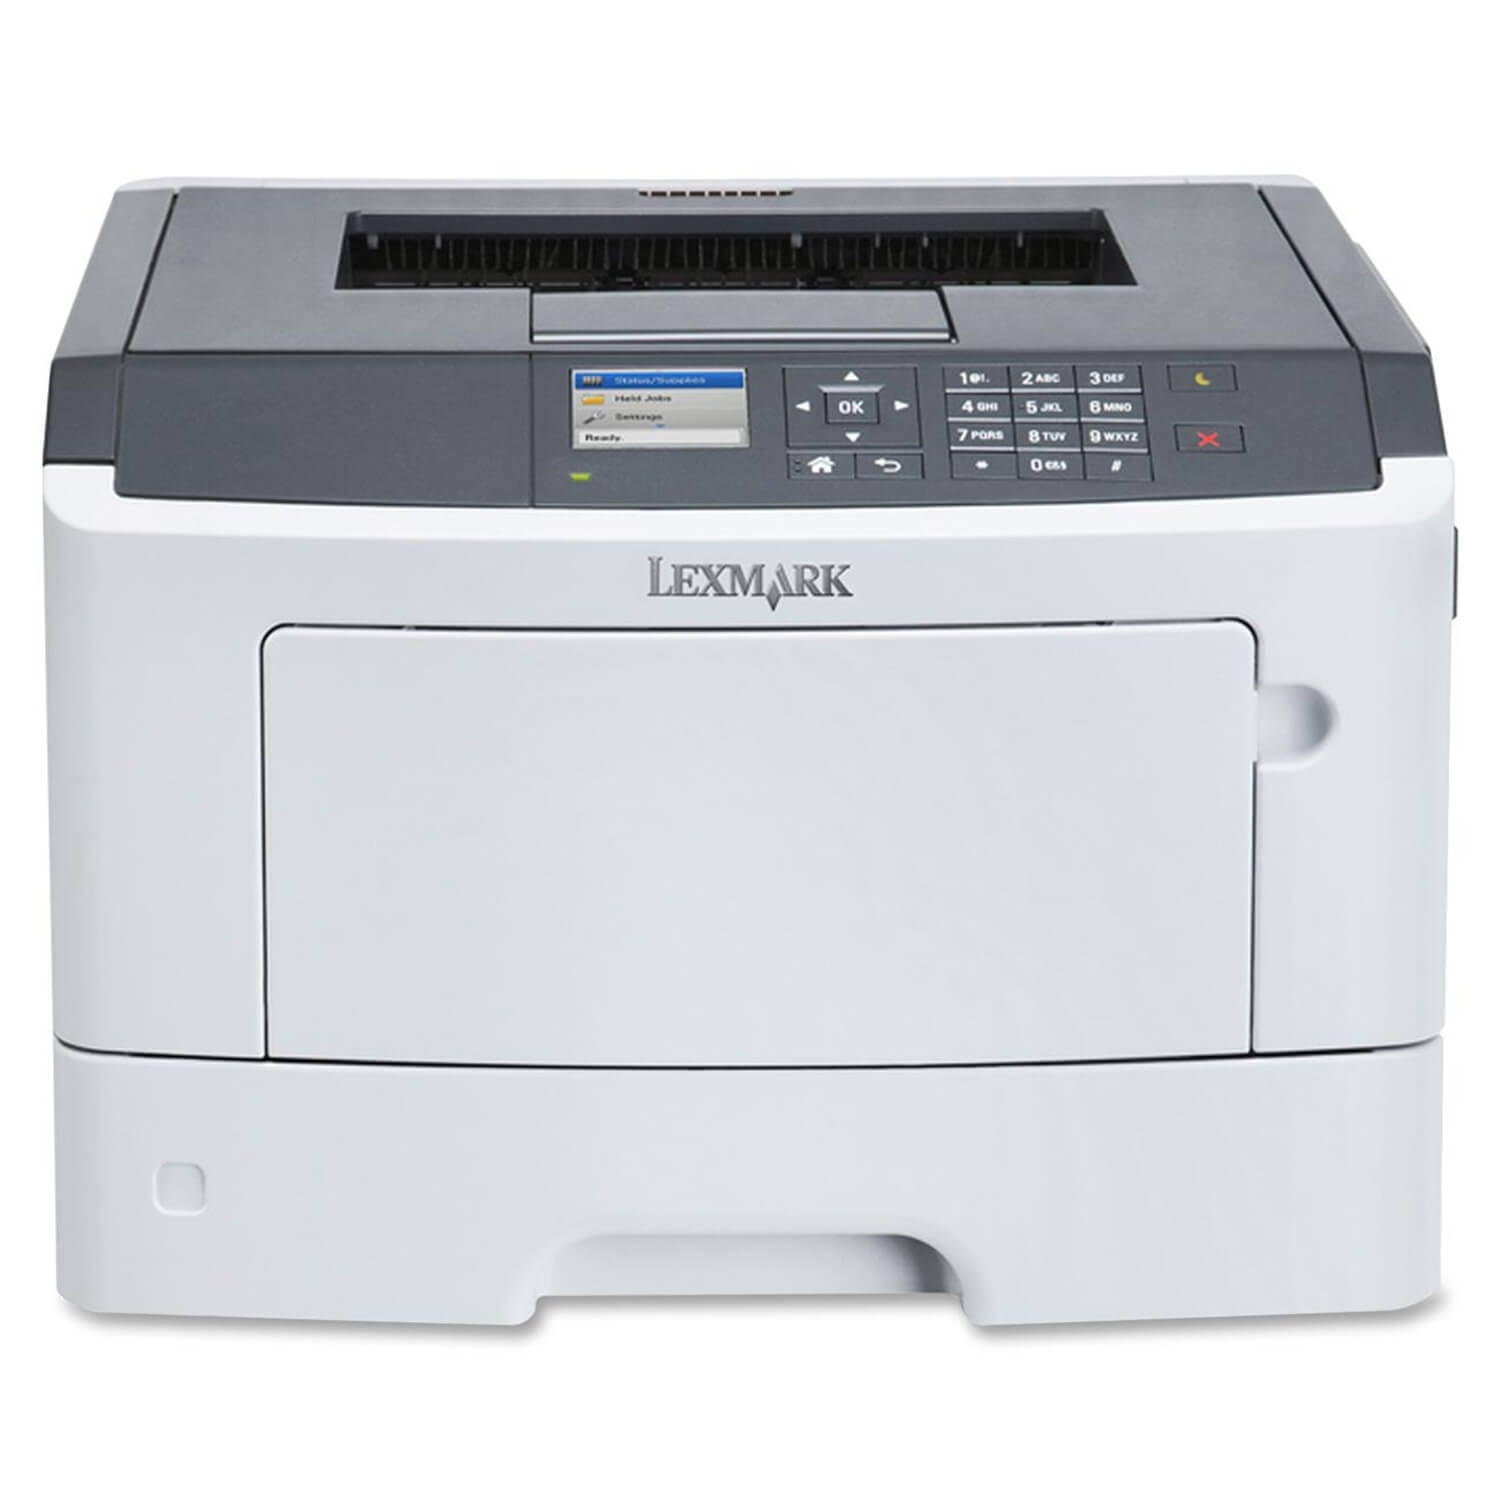  Imprimanta laser monocrom Lexmark MS510dn, A4 